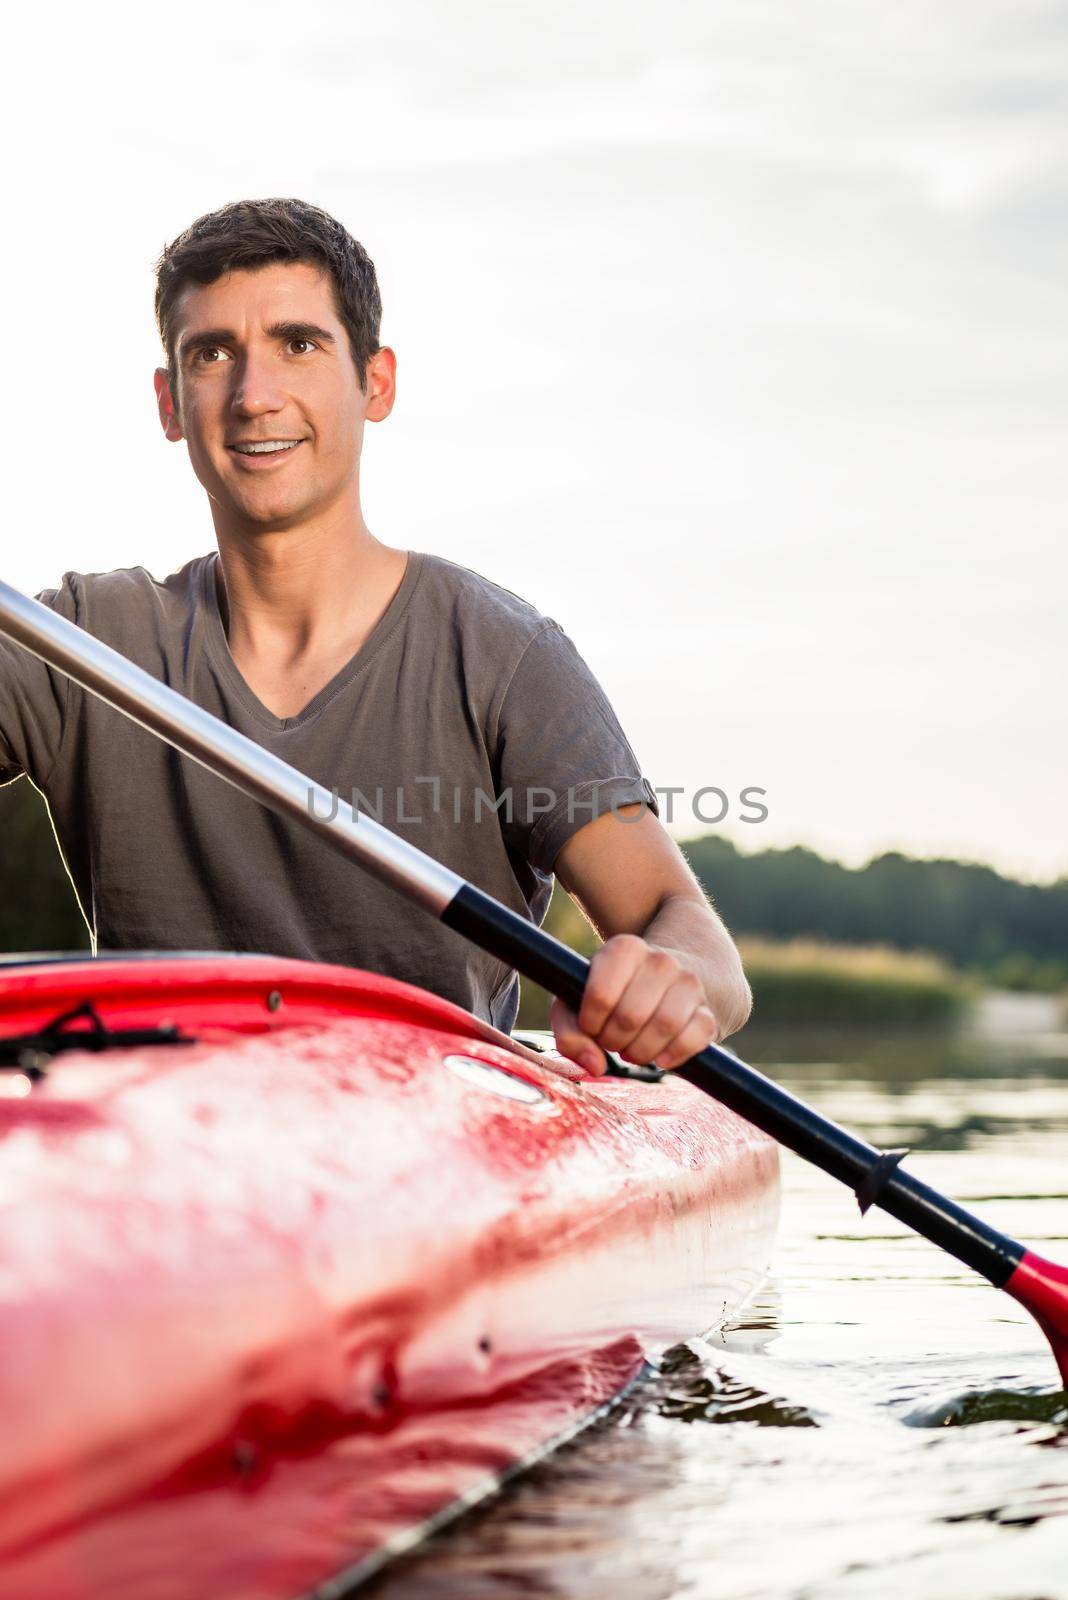 Smiling man rowing in kayak by Kzenon